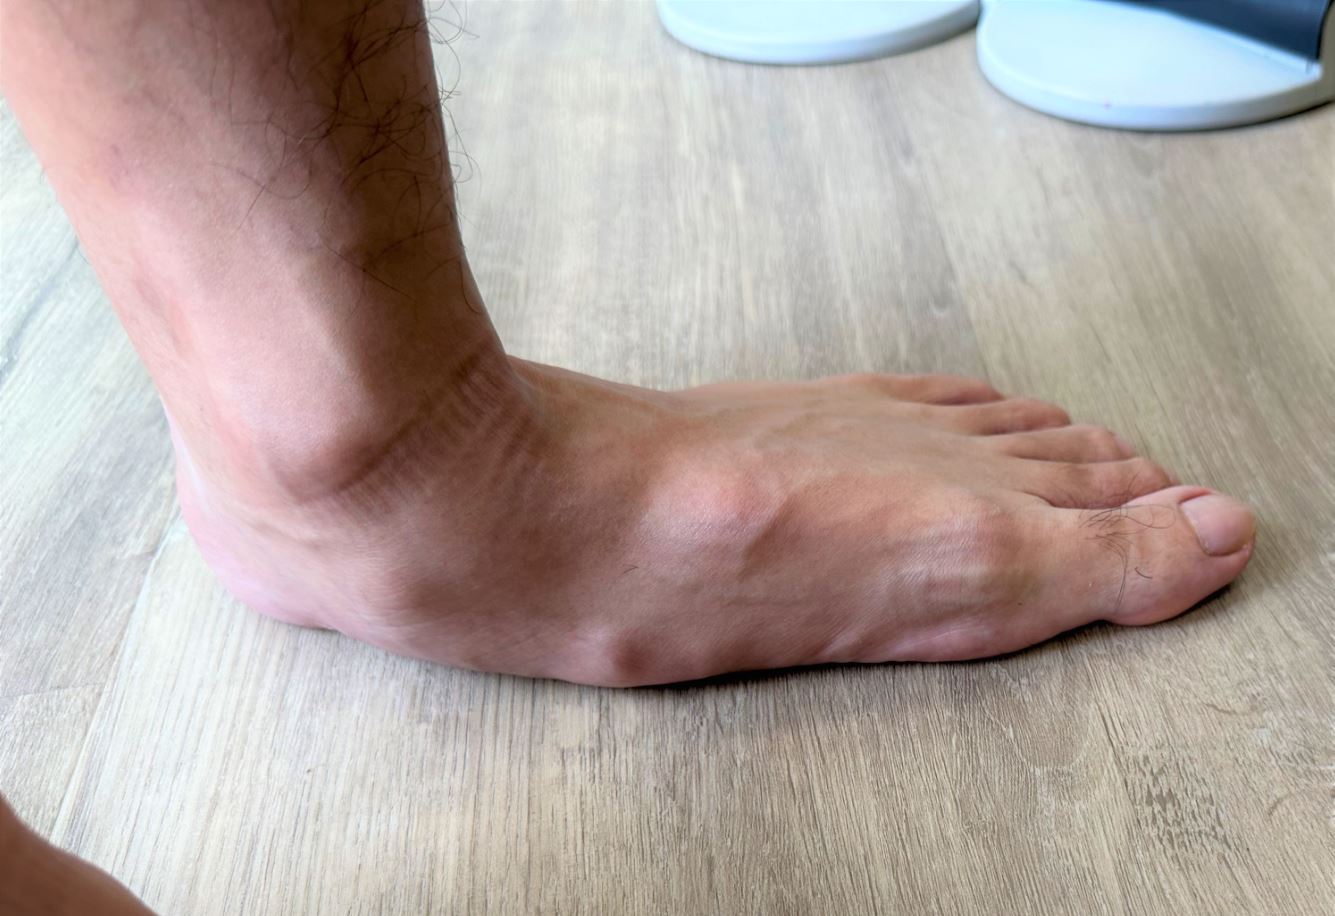 Signs and symptoms of flat feet (pes planus).